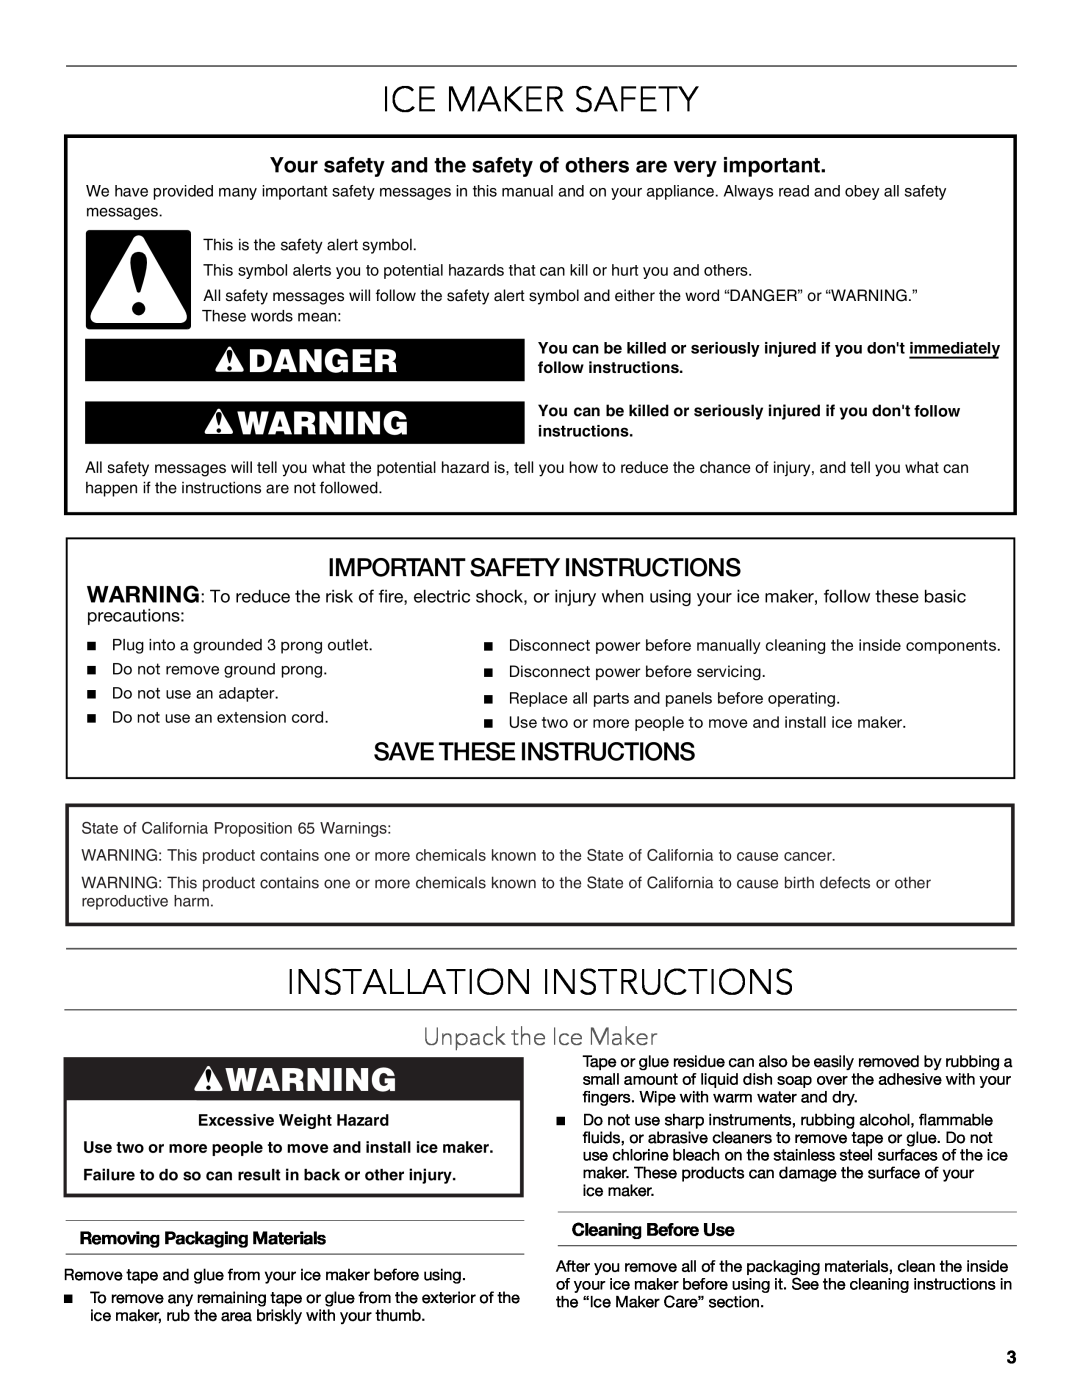 KitchenAid W10515677C Ice Maker Safety, Installation Instructions, Danger, Important Safety Instructions, precautions 